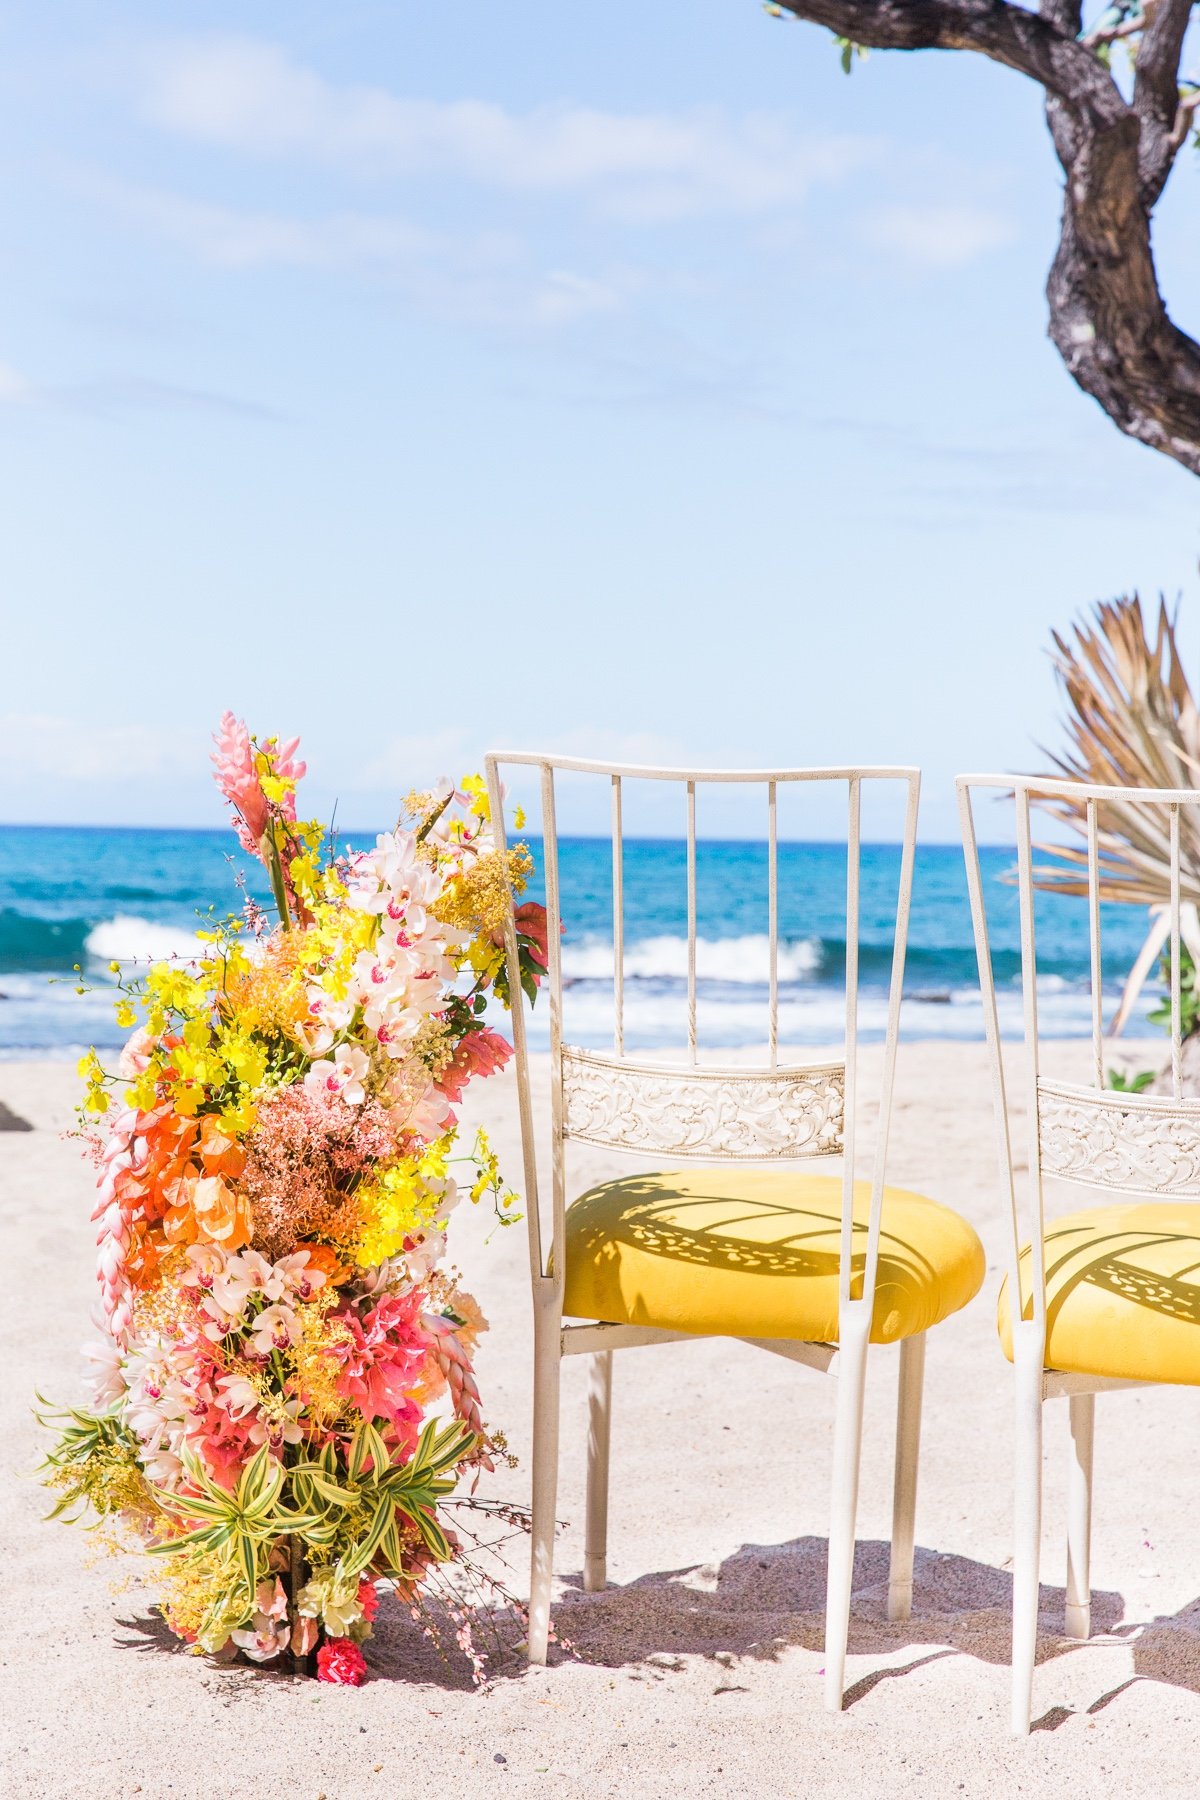 Aisle decor ideas for a beach wedding ceremony at Four Seasons Resort, Hualalai